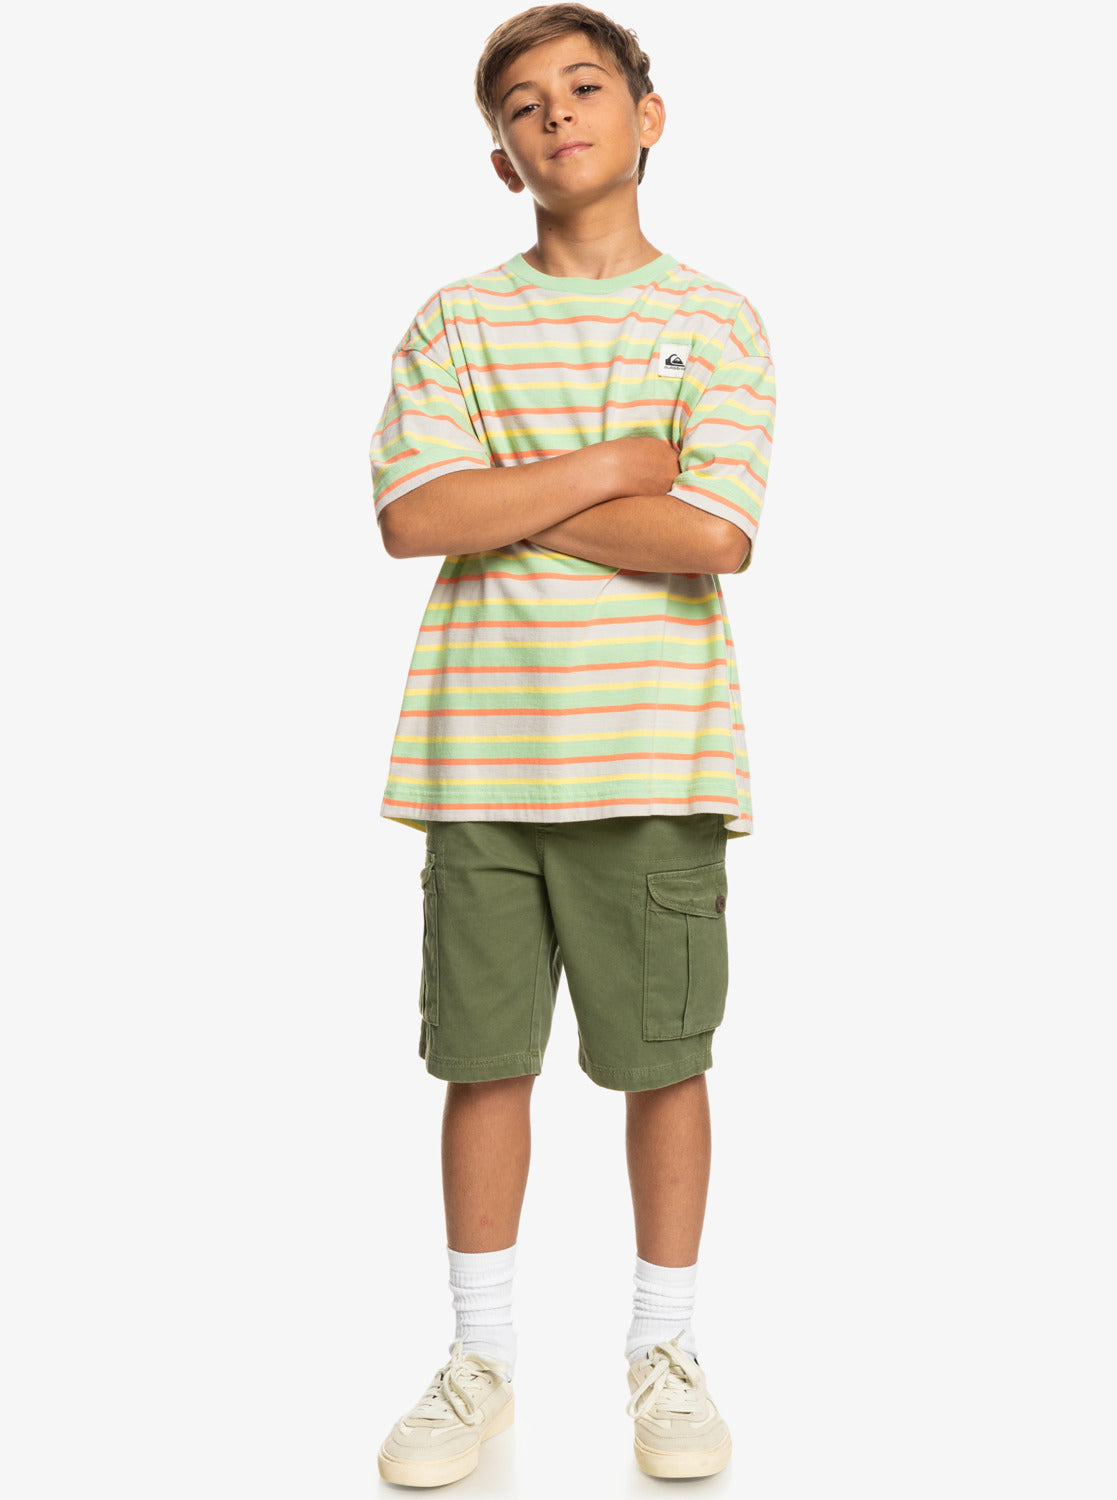 Quiksilver New Stripe Camiseta Niño